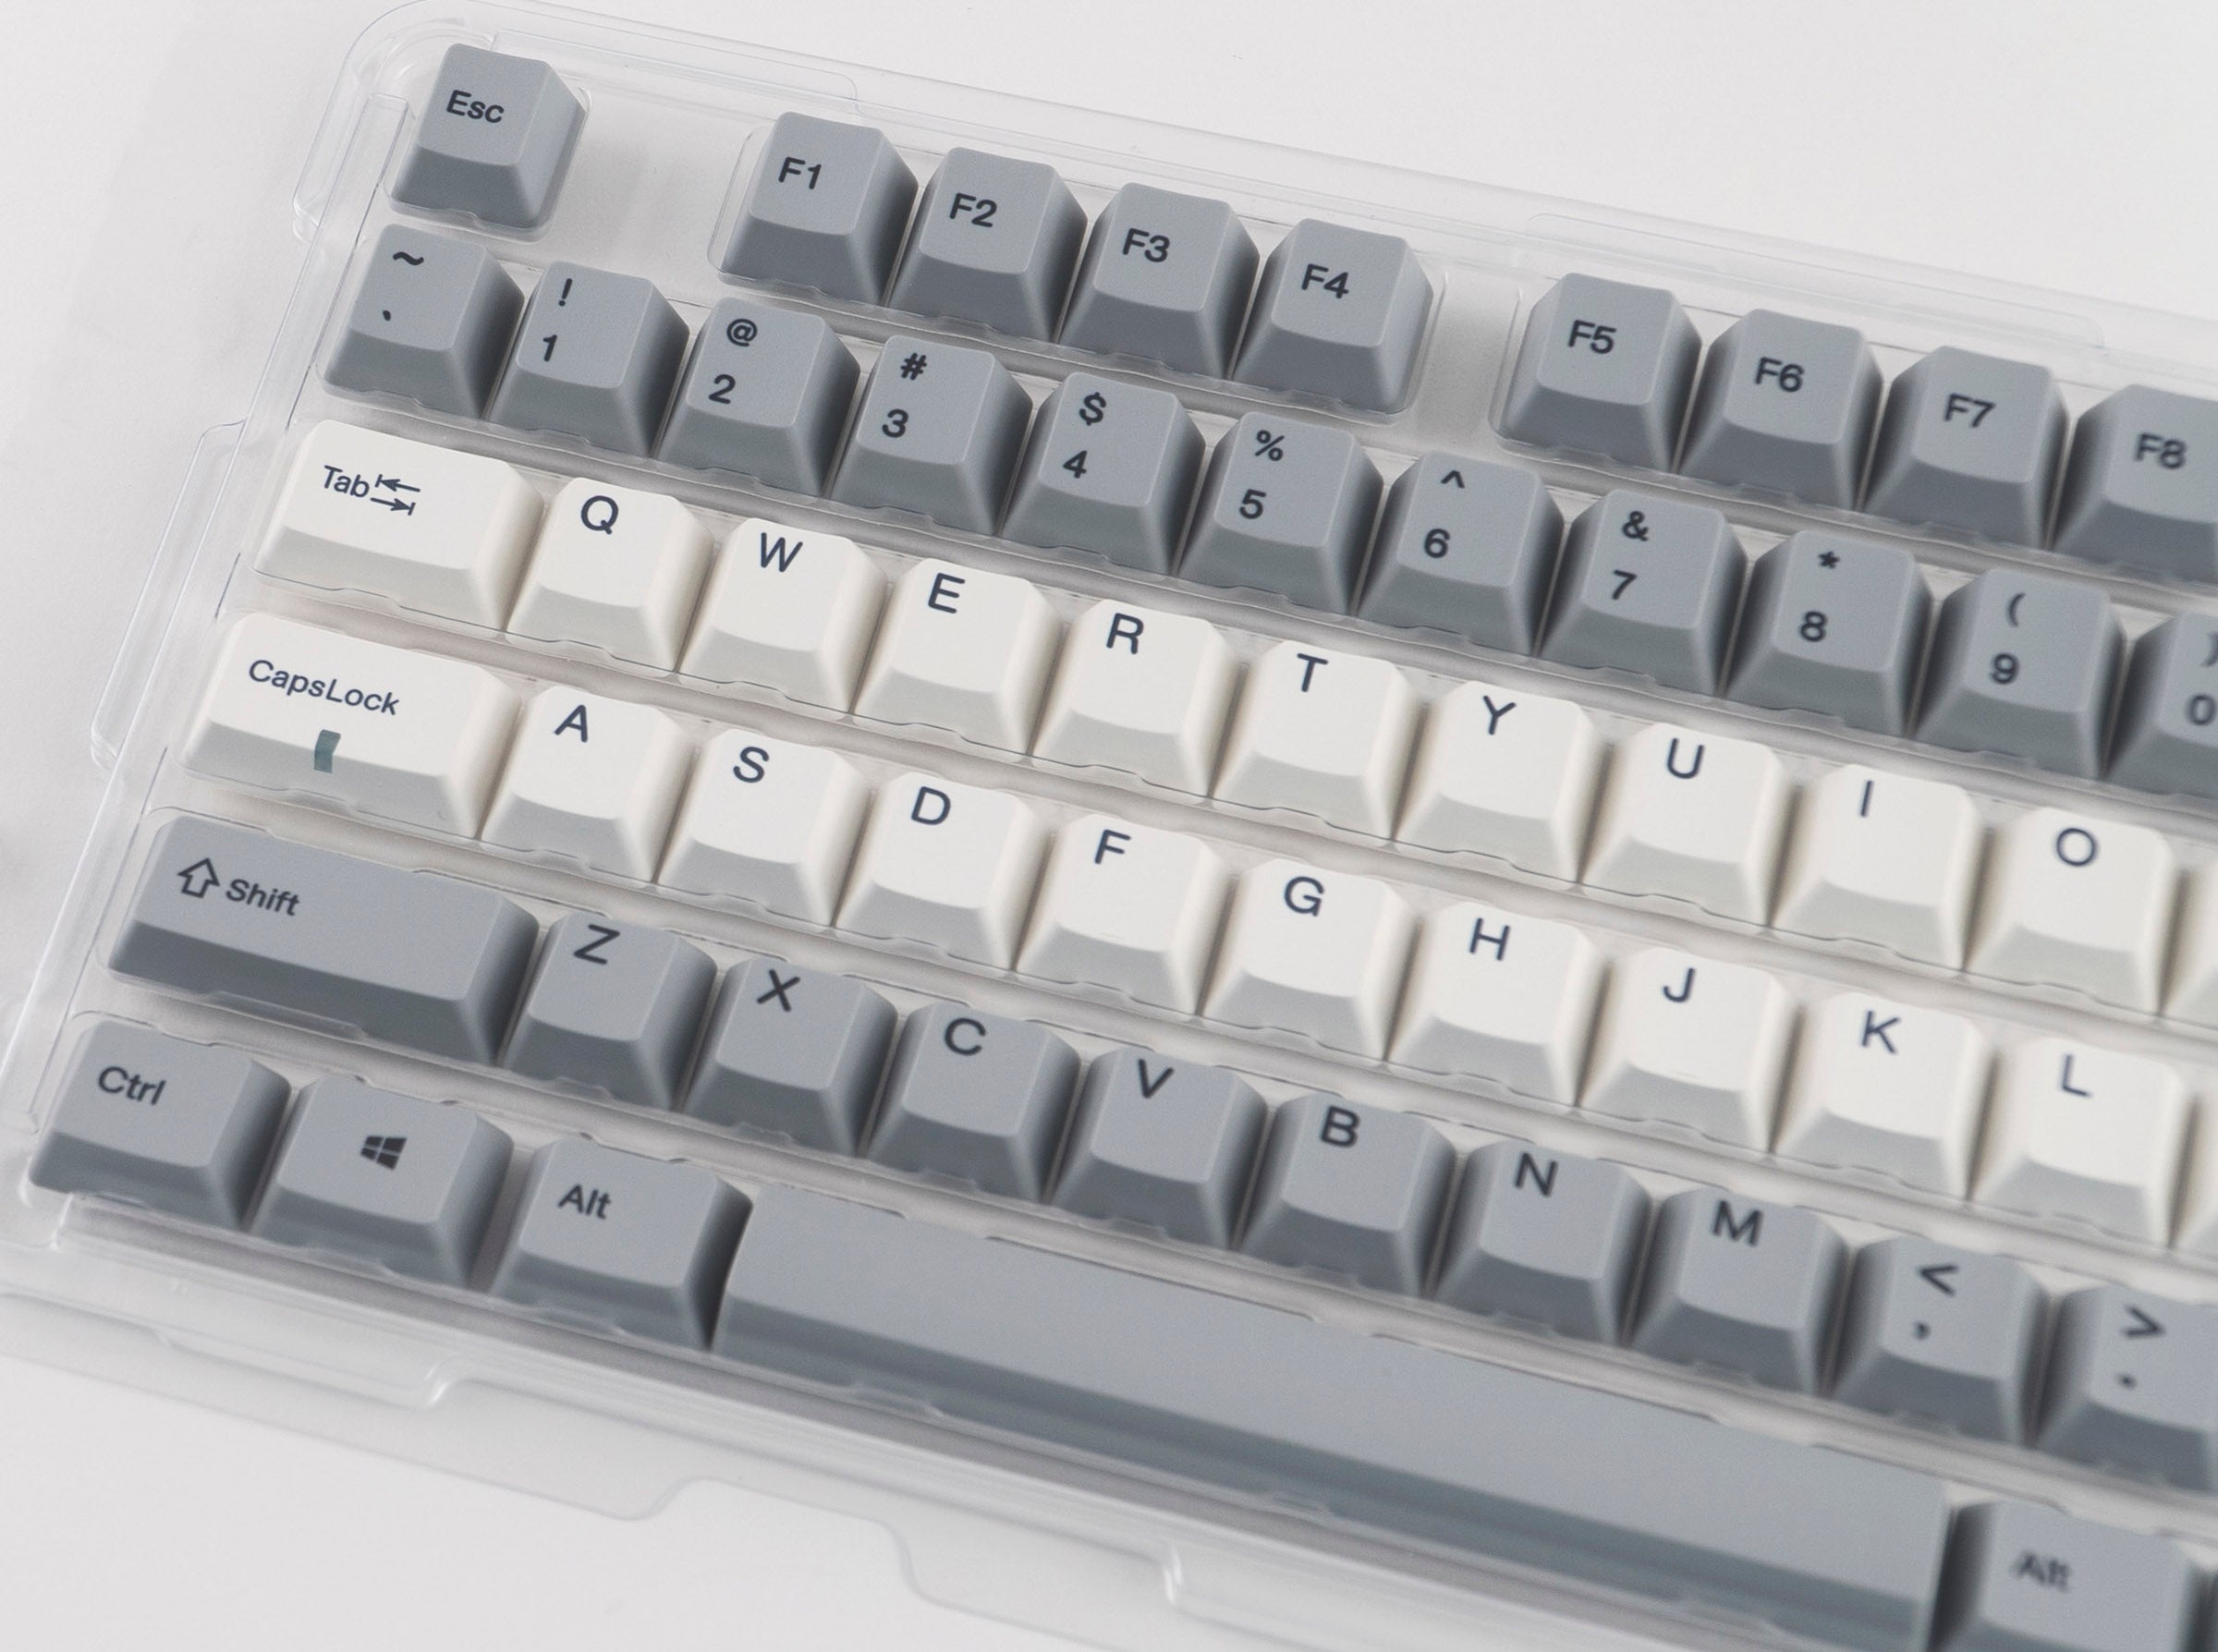 Varmilo 108-Key Dye Sub PBT Keycap Set White and Grey MKKJ7MG3E6 |34147|